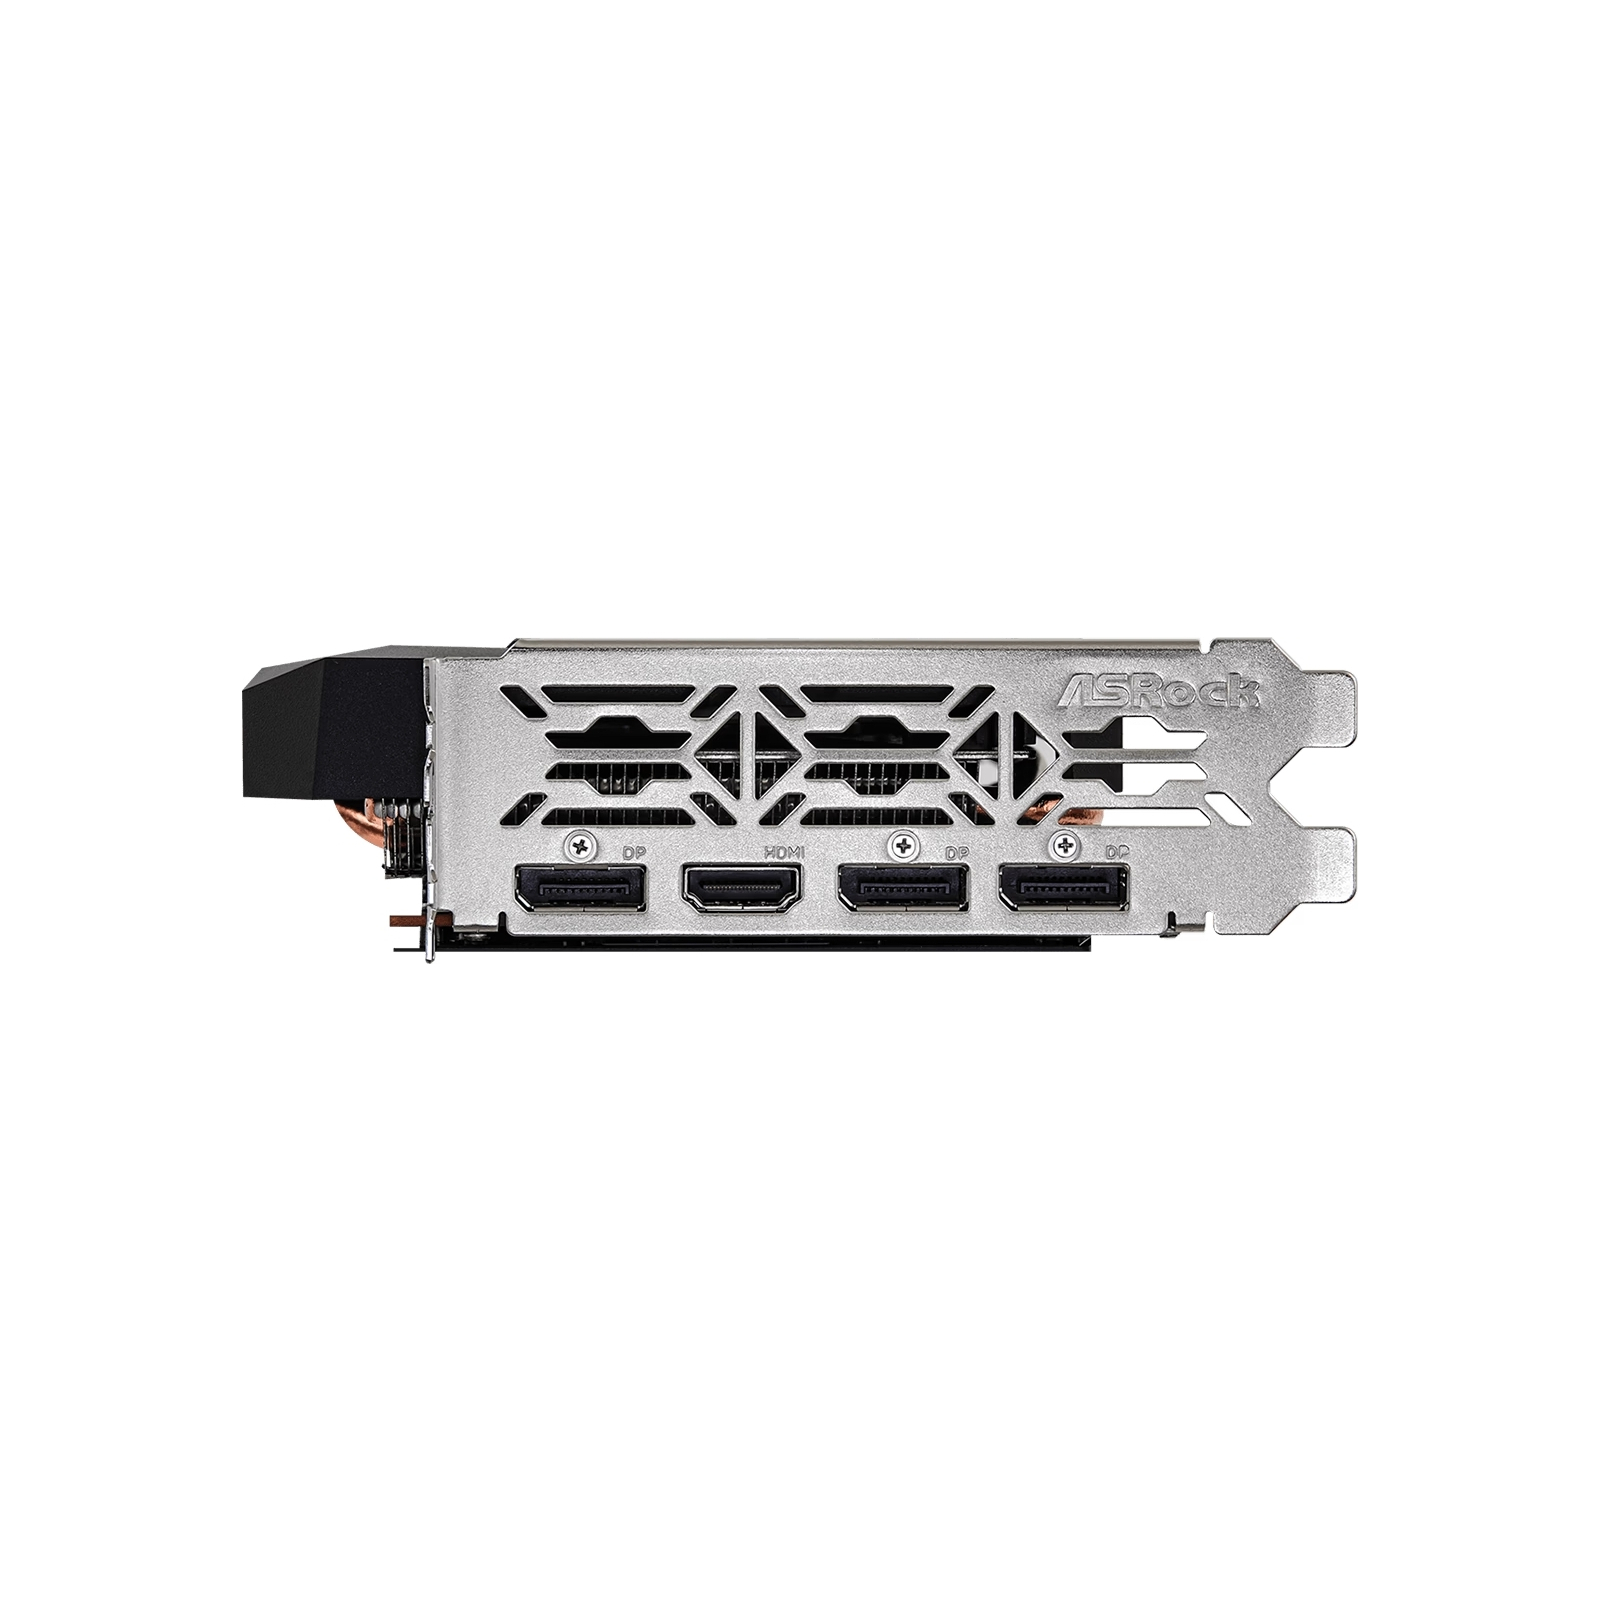 Видеокарта ASRock Radeon RX 6600 8Gb Challenger D OC (RX6600 CLD 8G OC) изображение 3